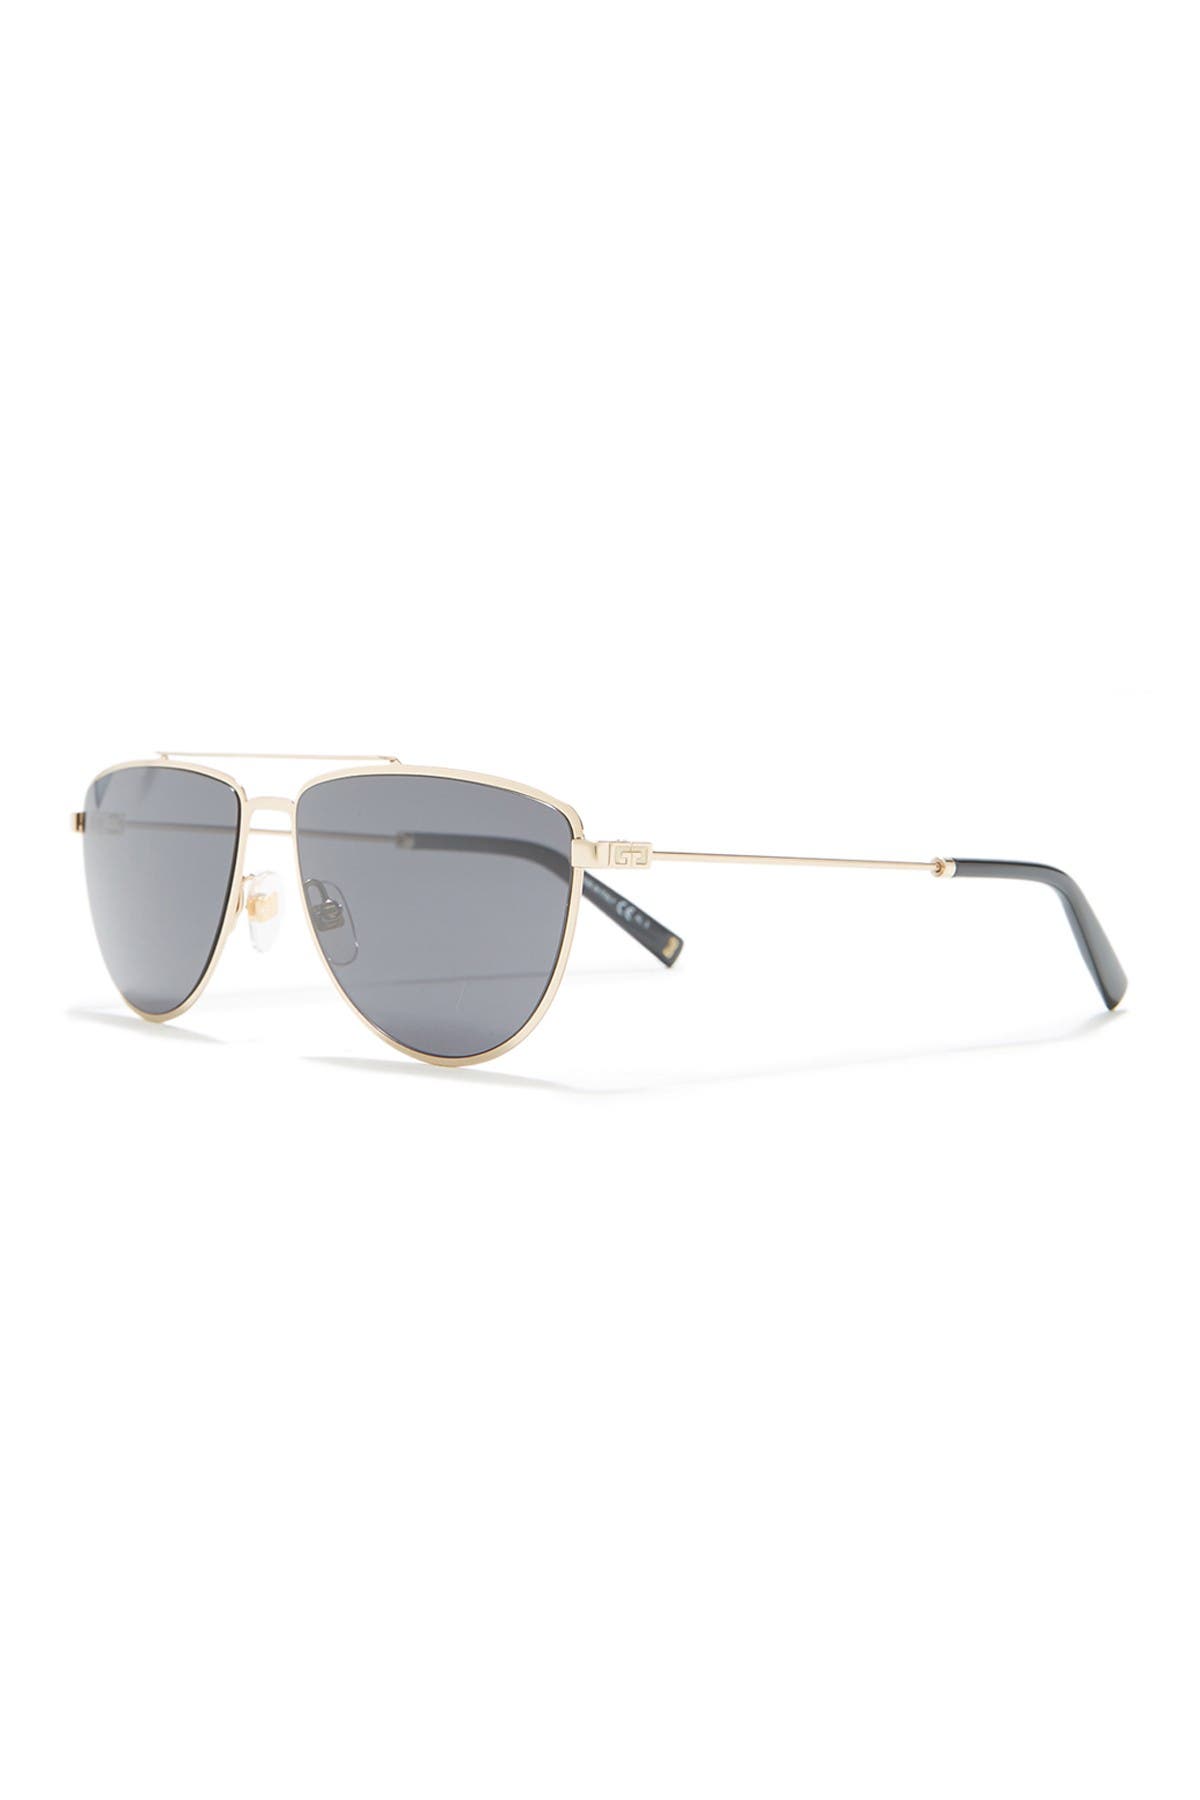 Givenchy | 58mm Aviator Sunglasses 